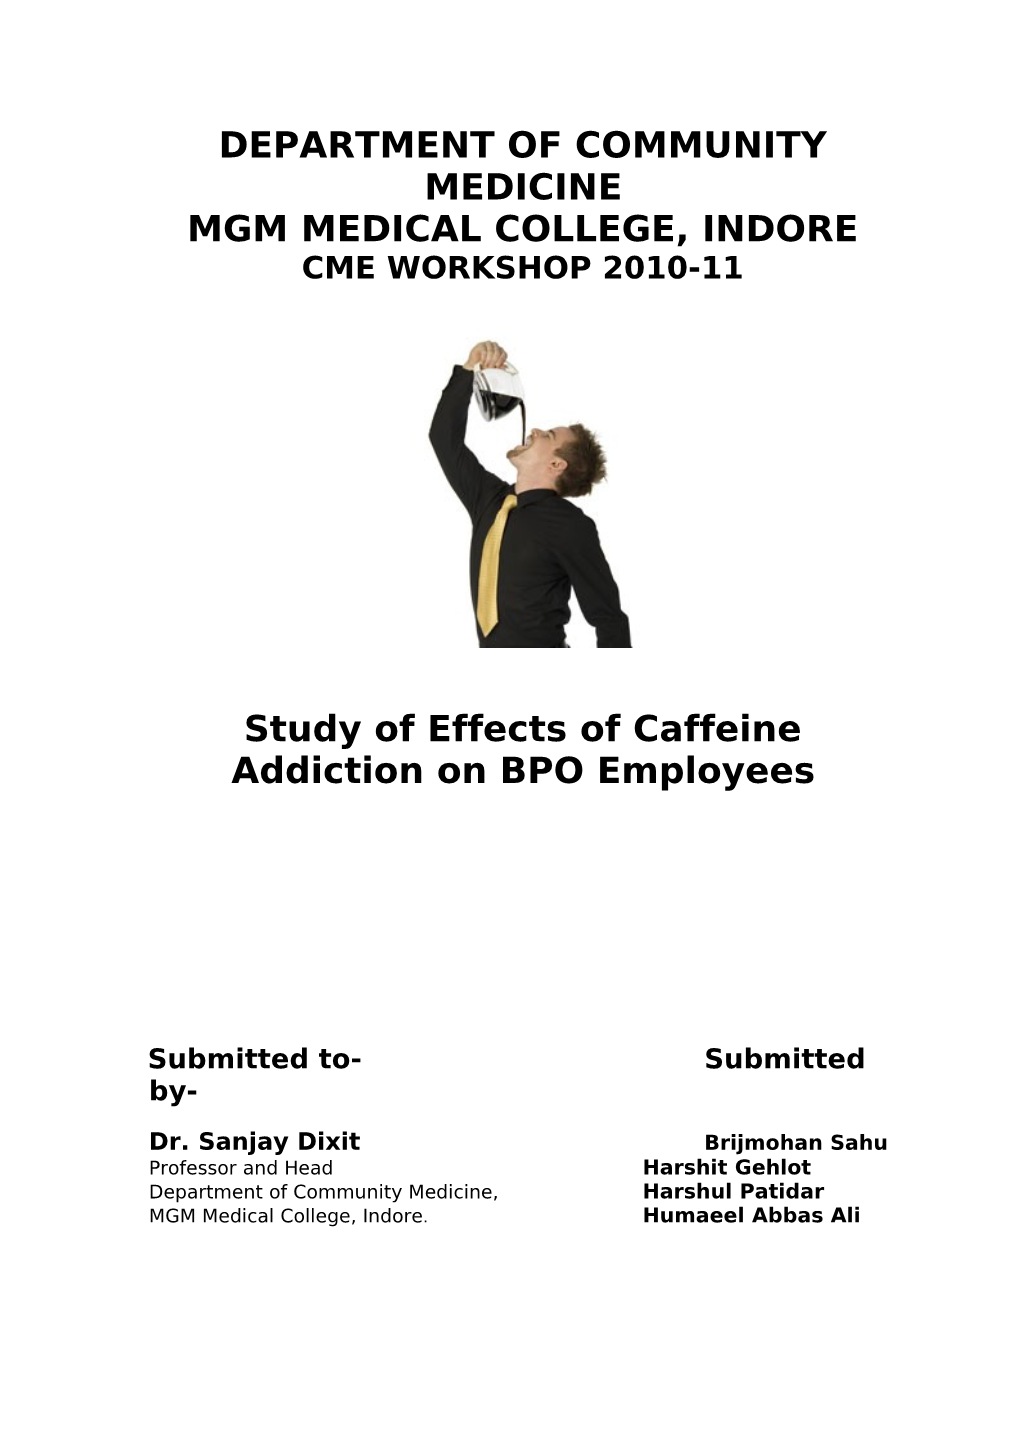 Caffeine Addiction on BPO Employees